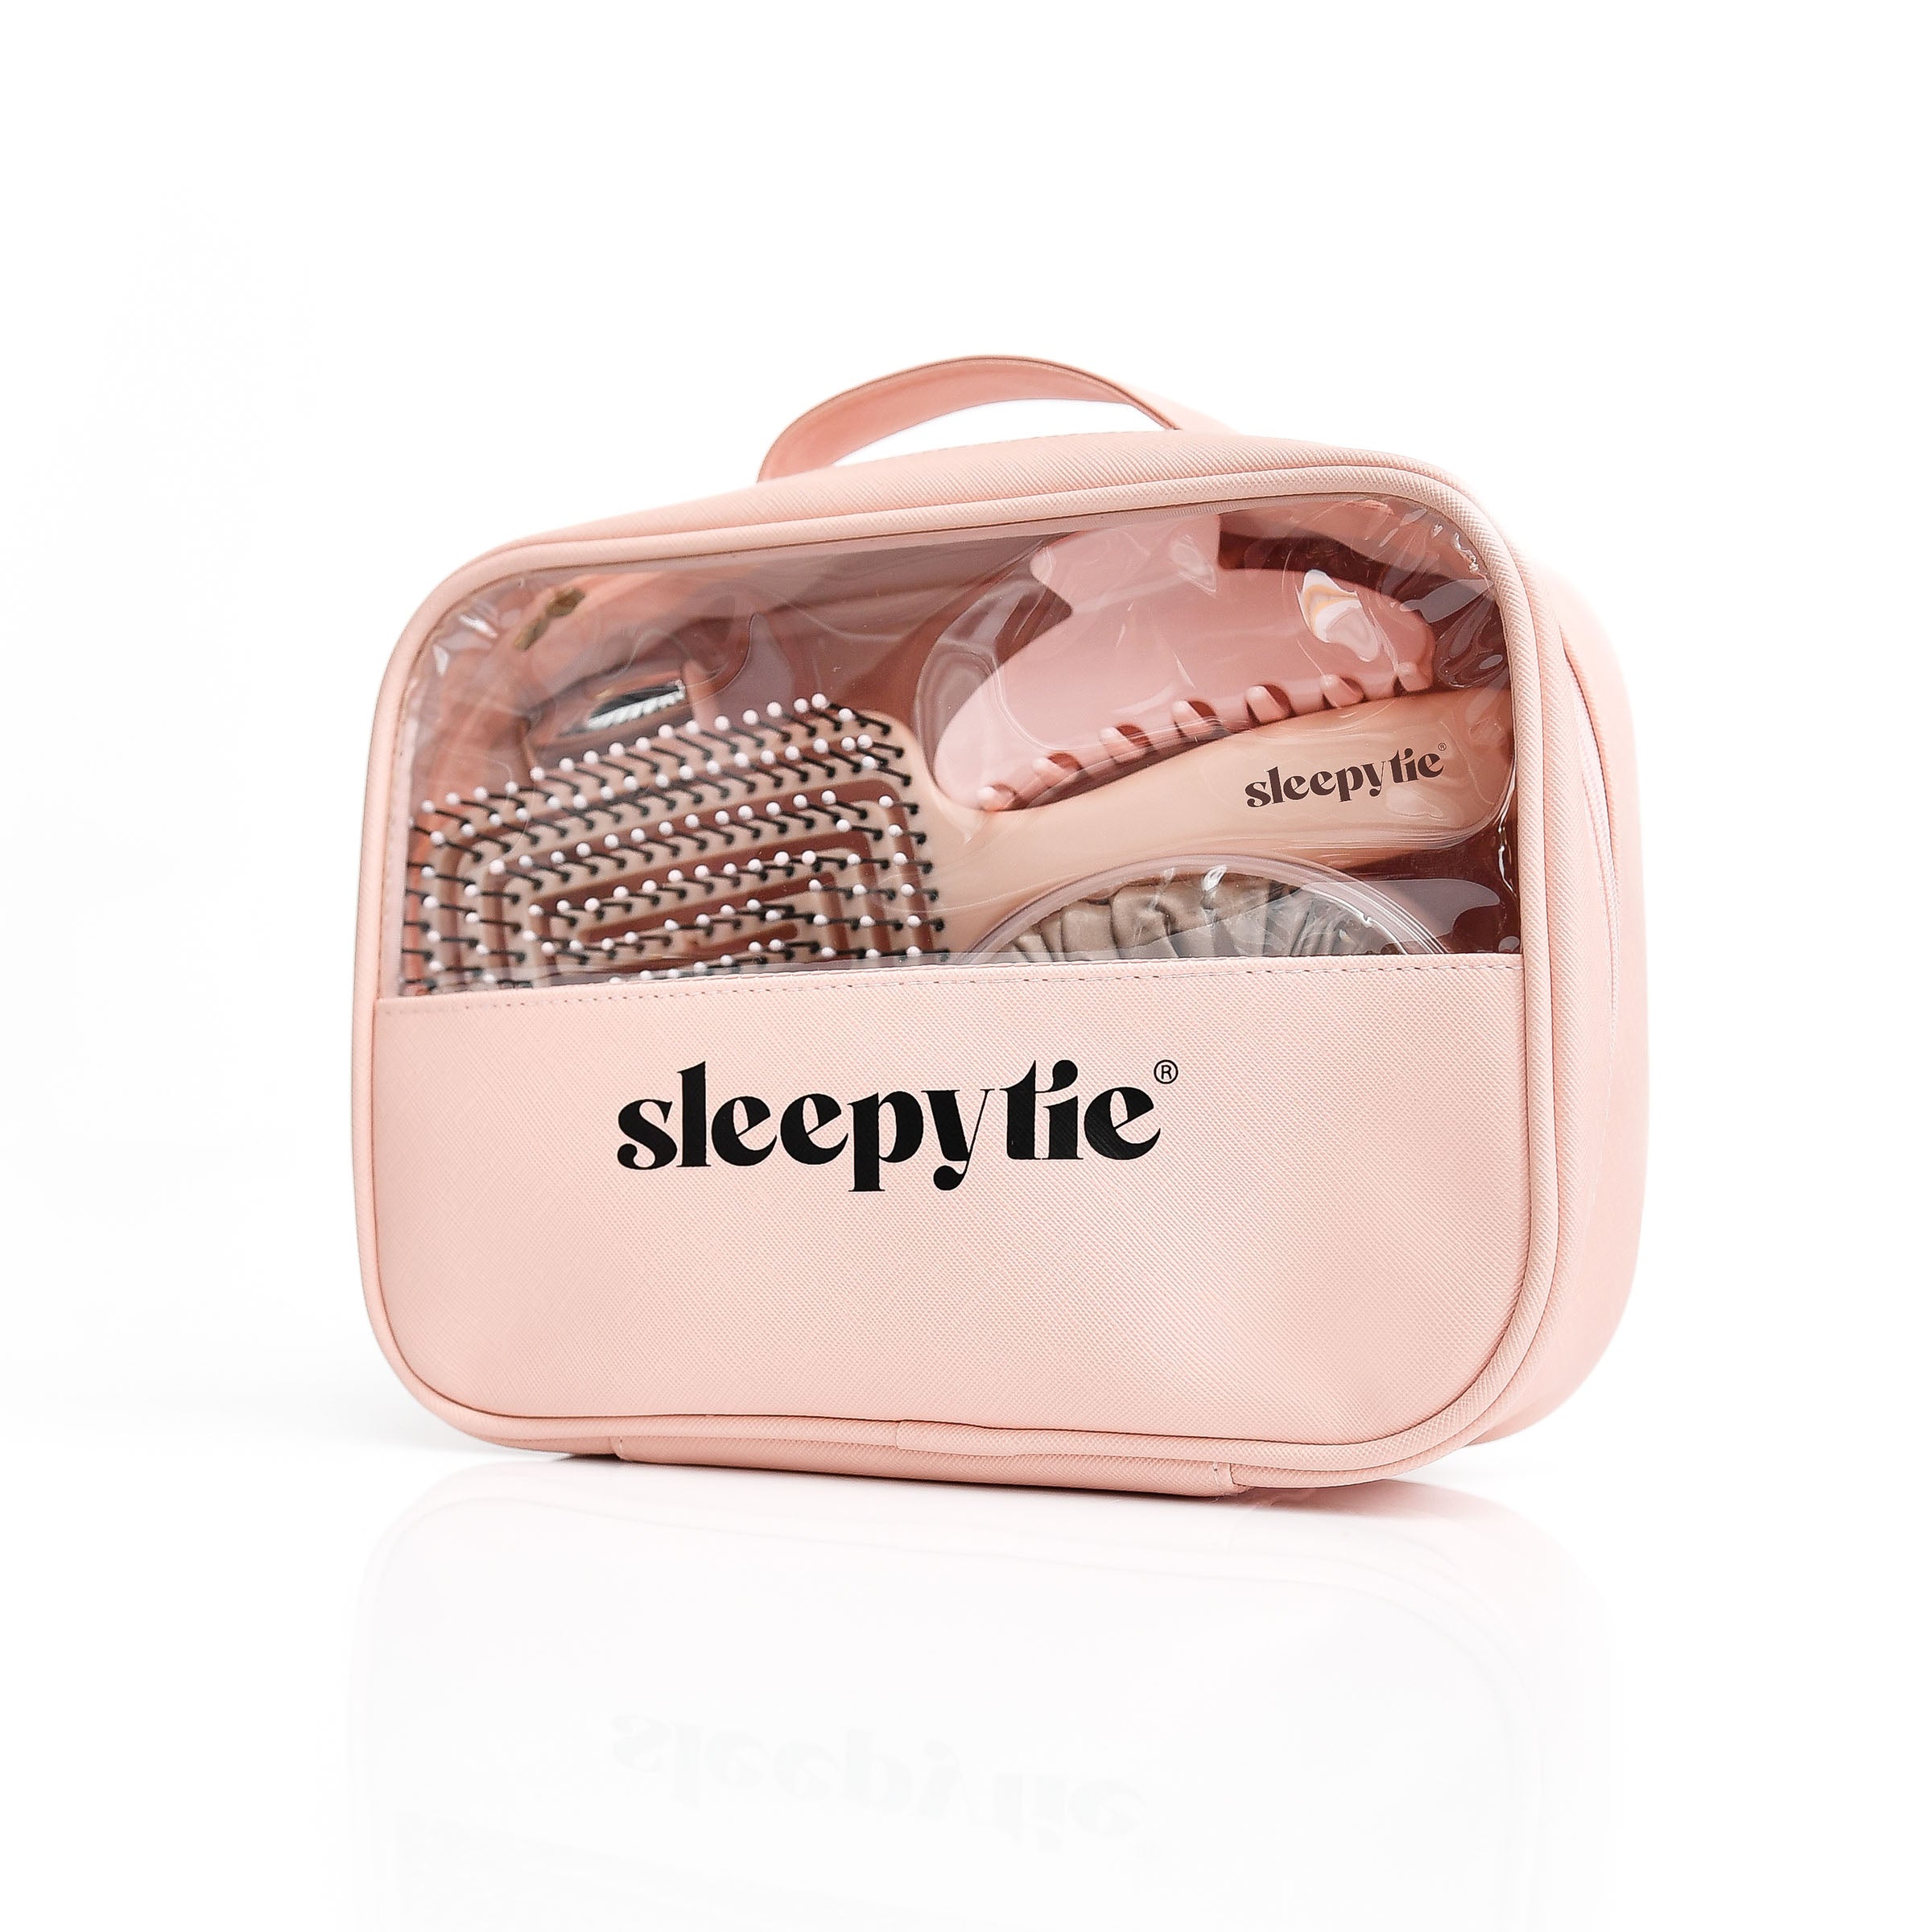 The Sleepy Tie® Self-Care Set